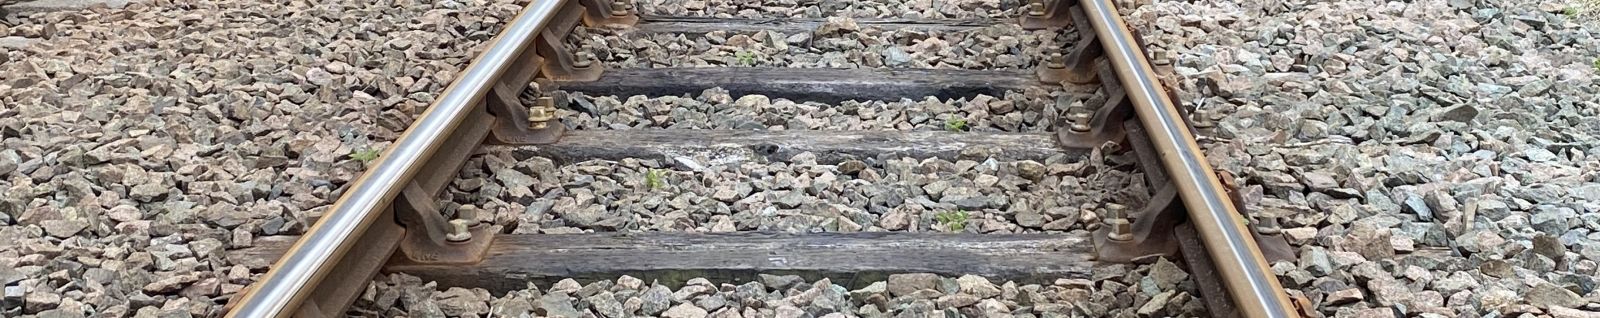 Wooden railway sleepers on the railway track, Australia. Railwaysleepers.com